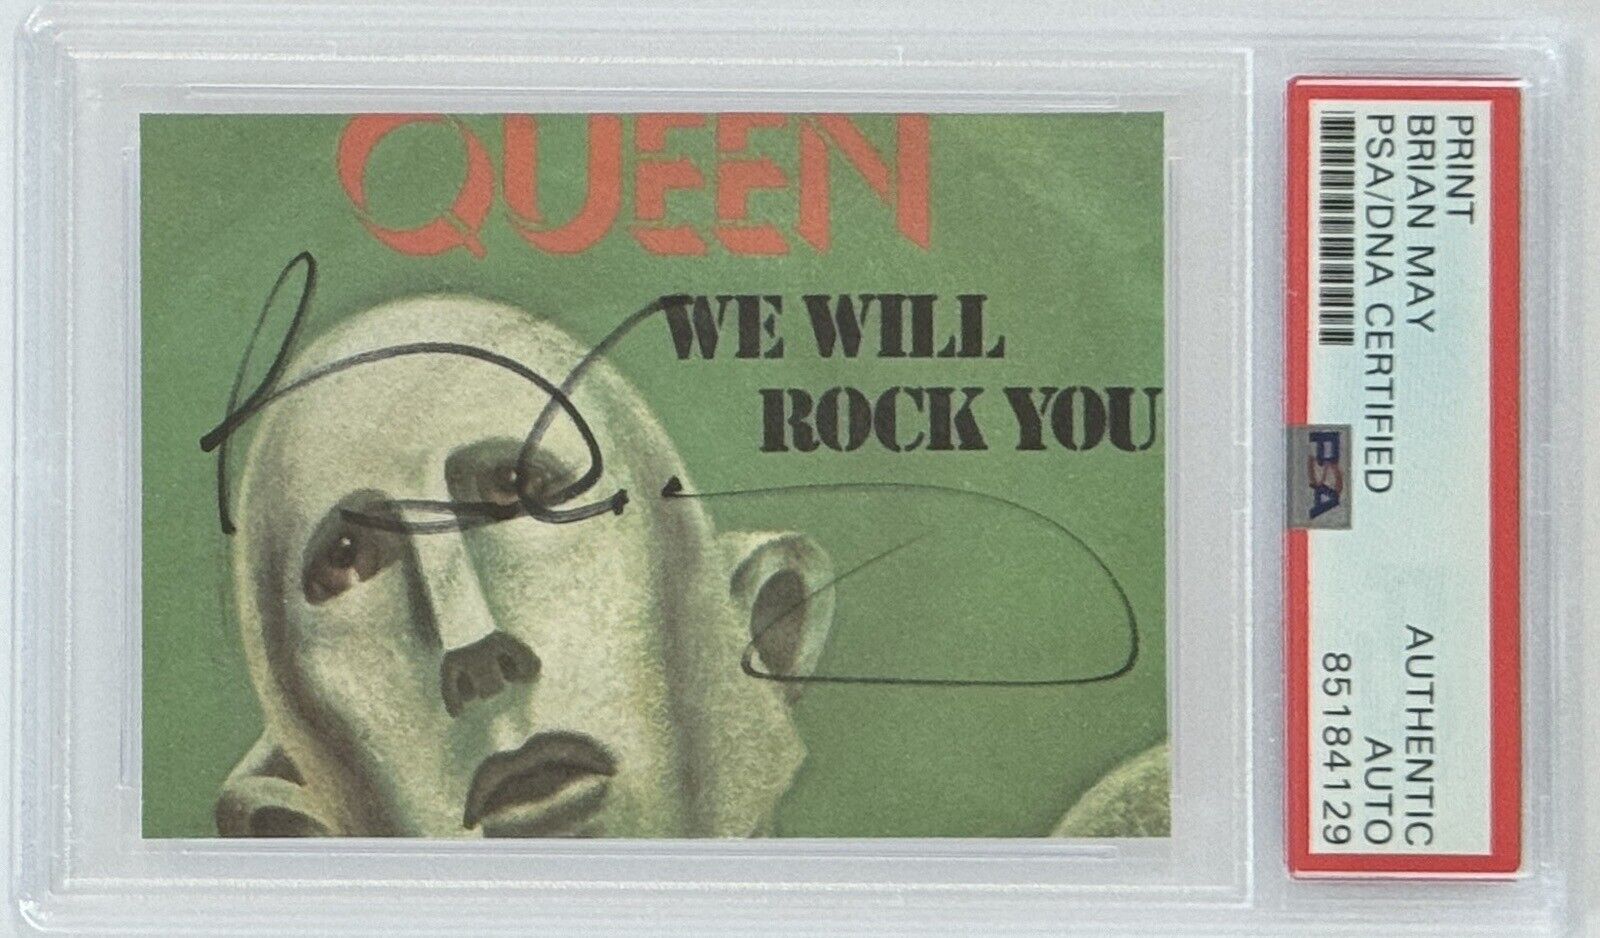 Brian May SIGNED QUEEN Guitarist We Will Rock You Album Cover Print PSA DNA COA